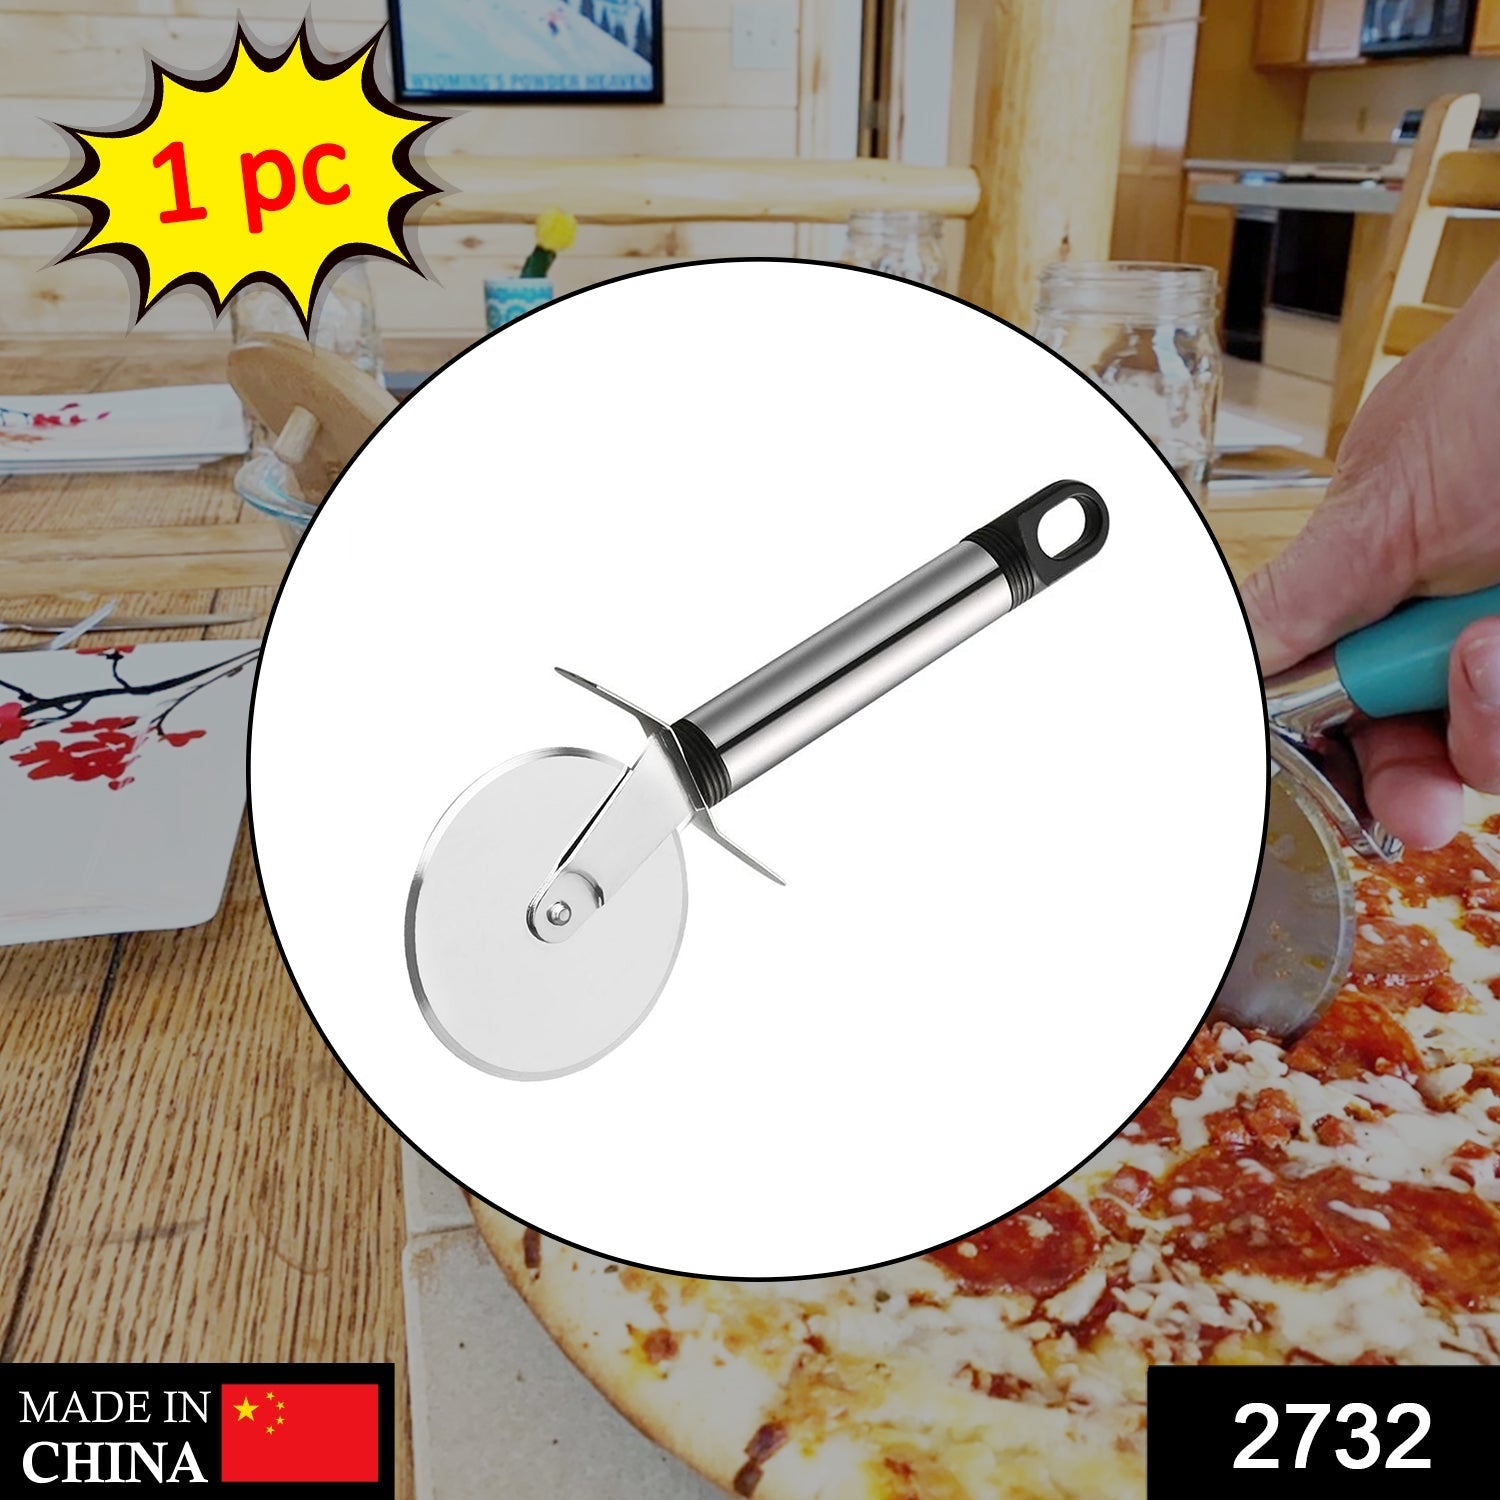 2732 Stainless Steel Pizza Cutter, Pastry Cake Slicer, Sharp, Wheel Type